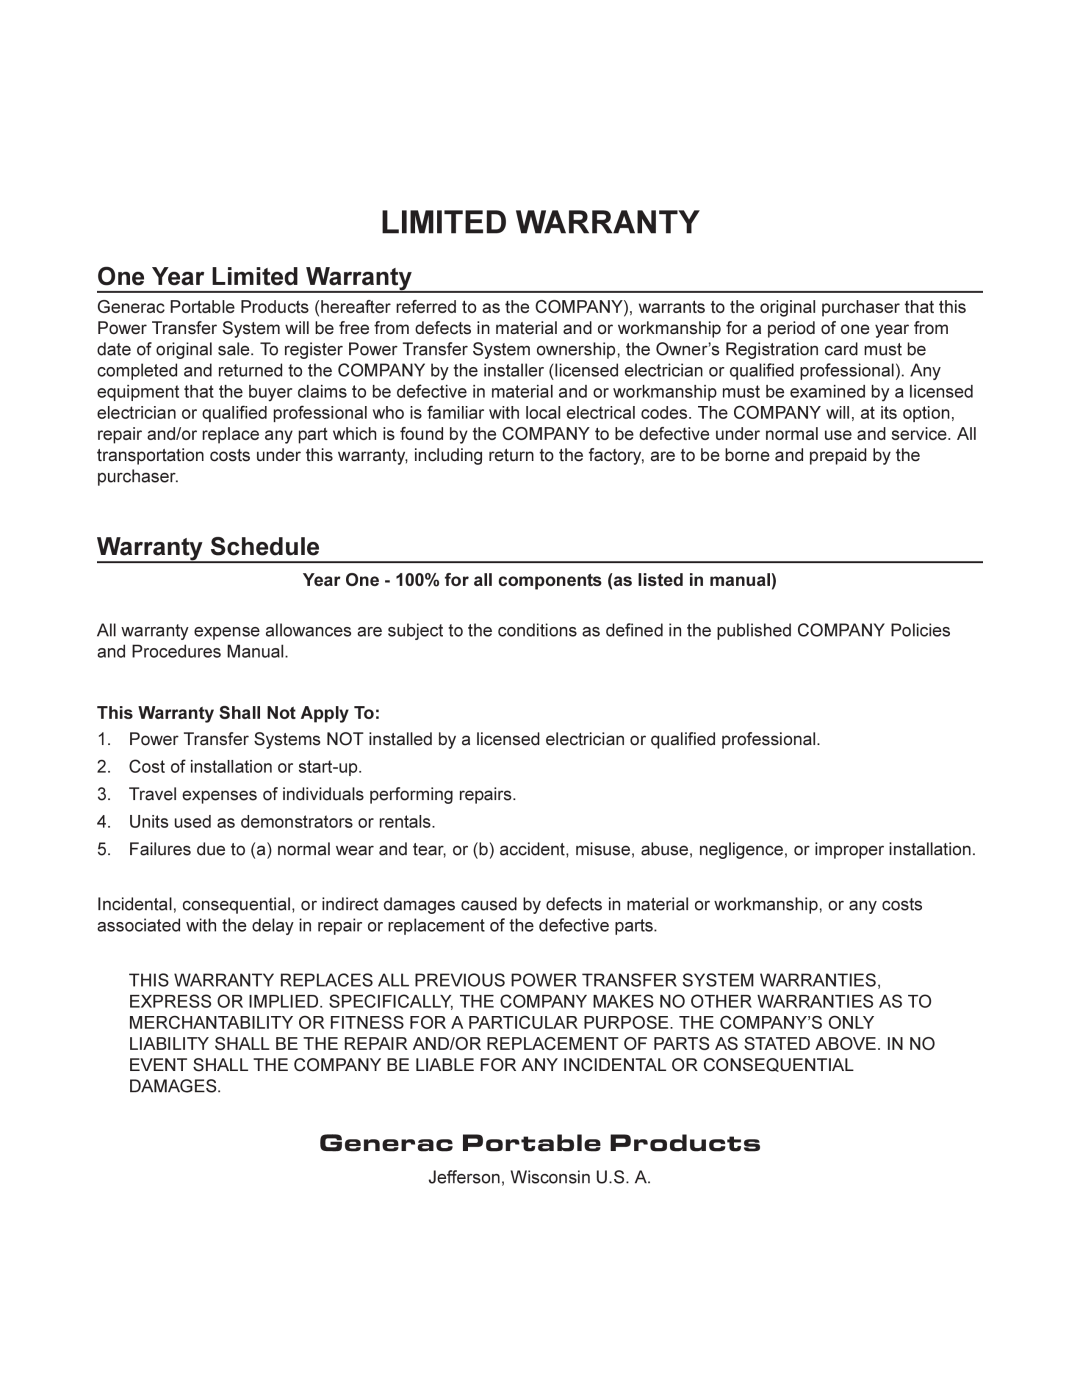 Generac 1403-0 manual One Year Limited Warranty, Warranty Schedule, Generac Portable Products 